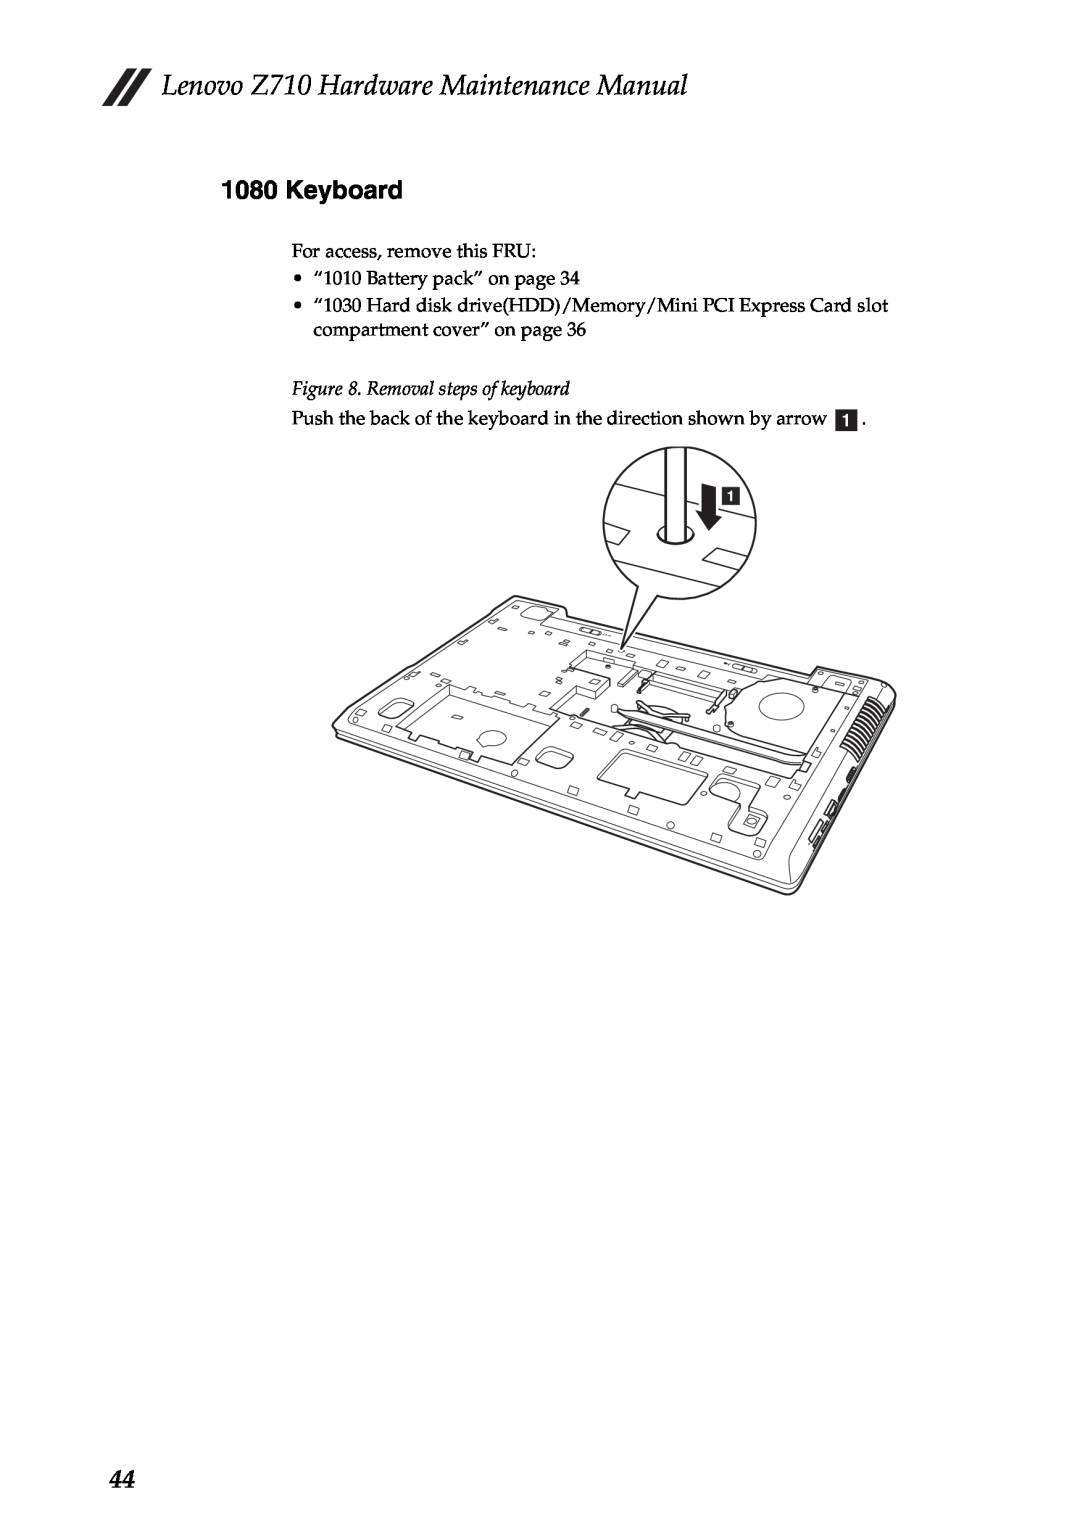 Lenovo manual Keyboard, Removal steps of keyboard, Lenovo Z710 Hardware Maintenance Manual 